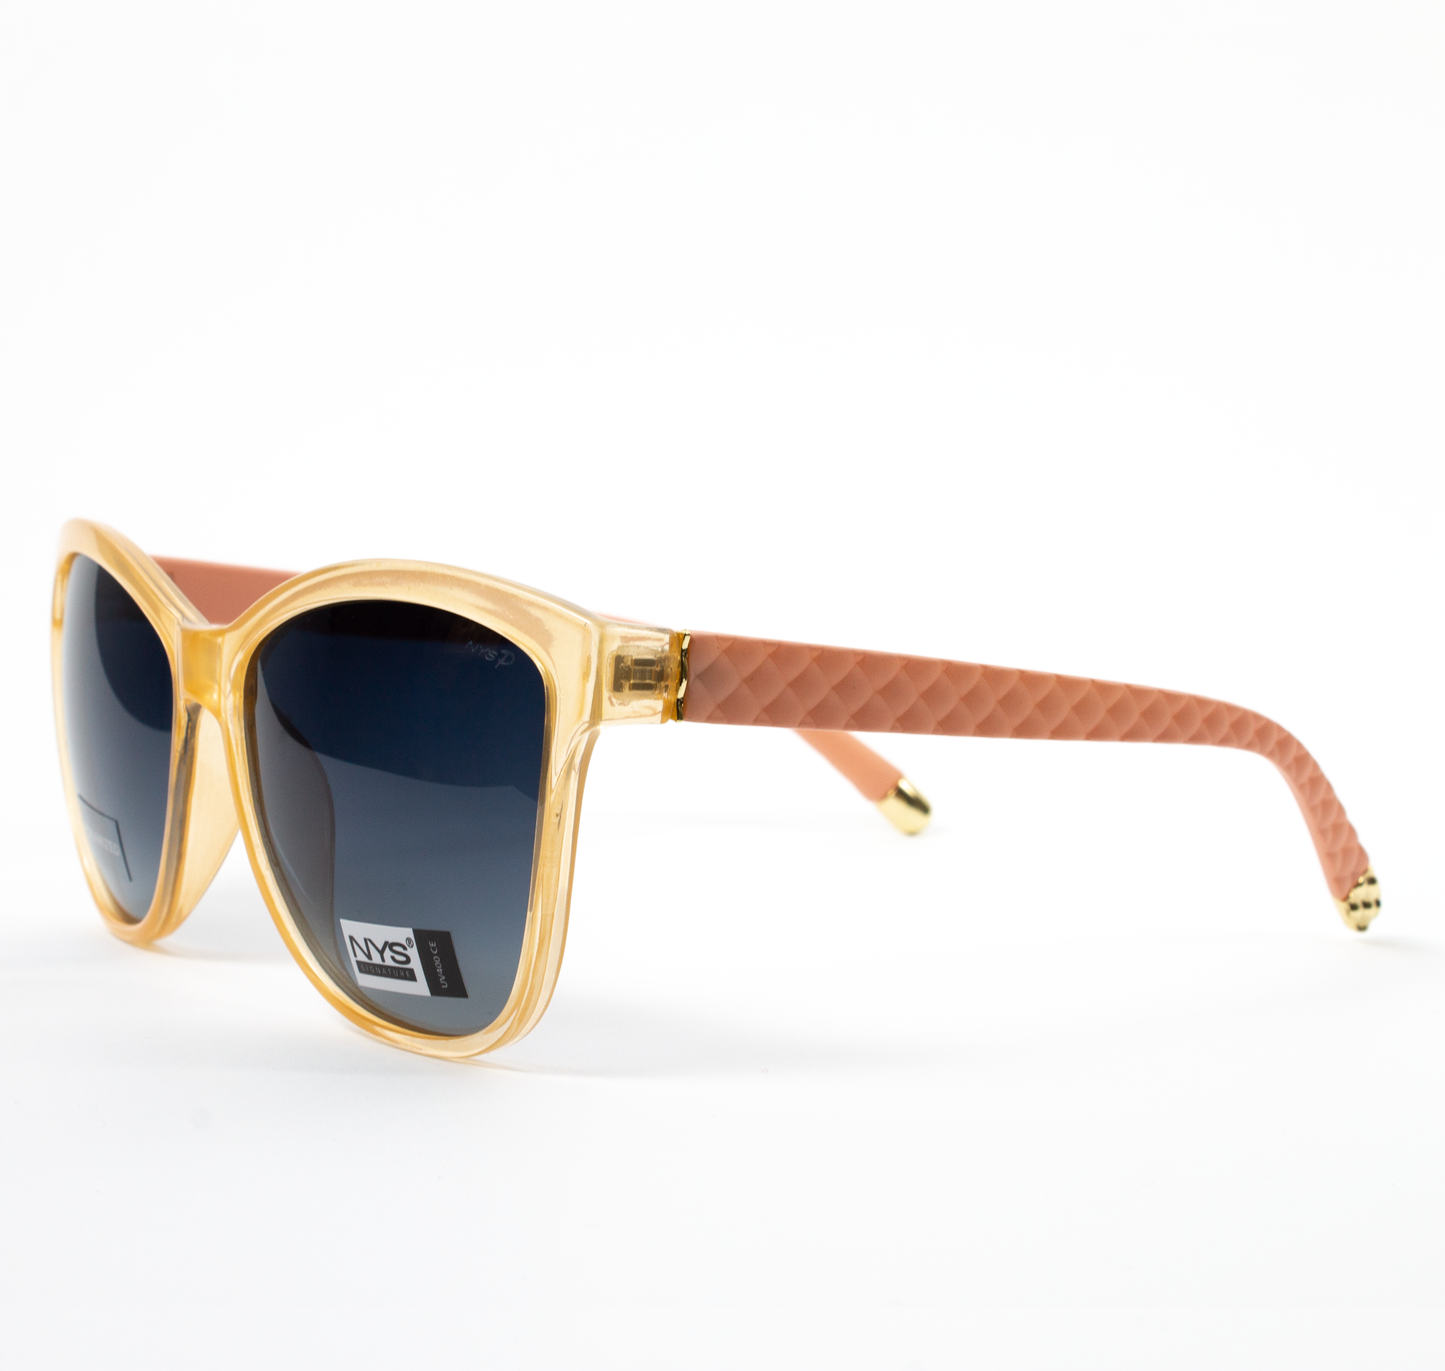 Clarkson Avenue Retro Sunglasses Polarized